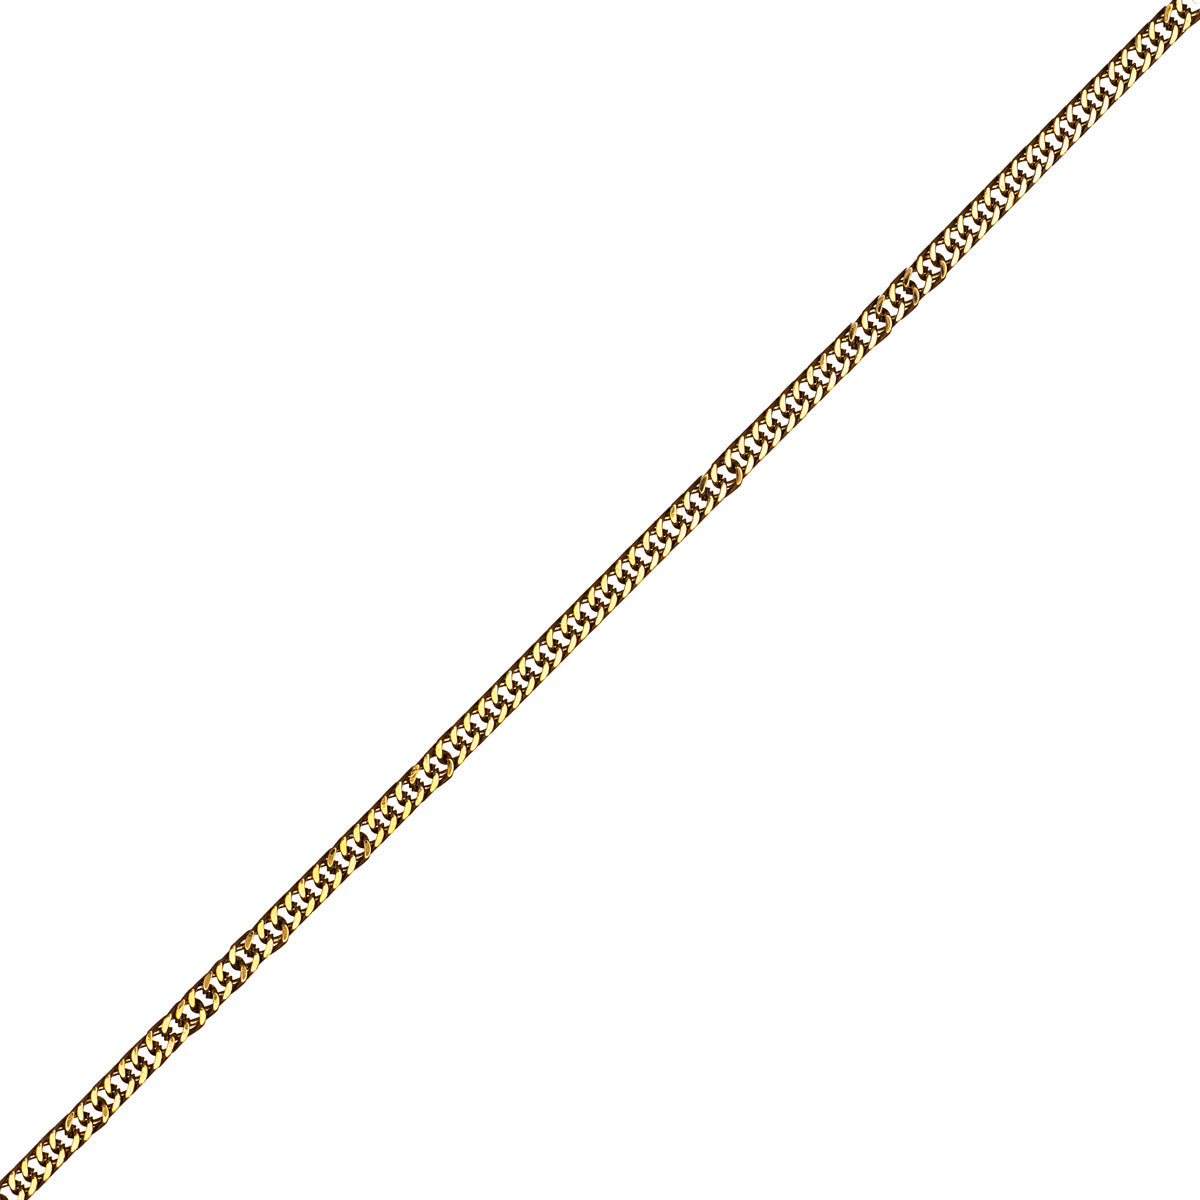 Dense reddish thin armor chain steel necklace 3mm 53cm